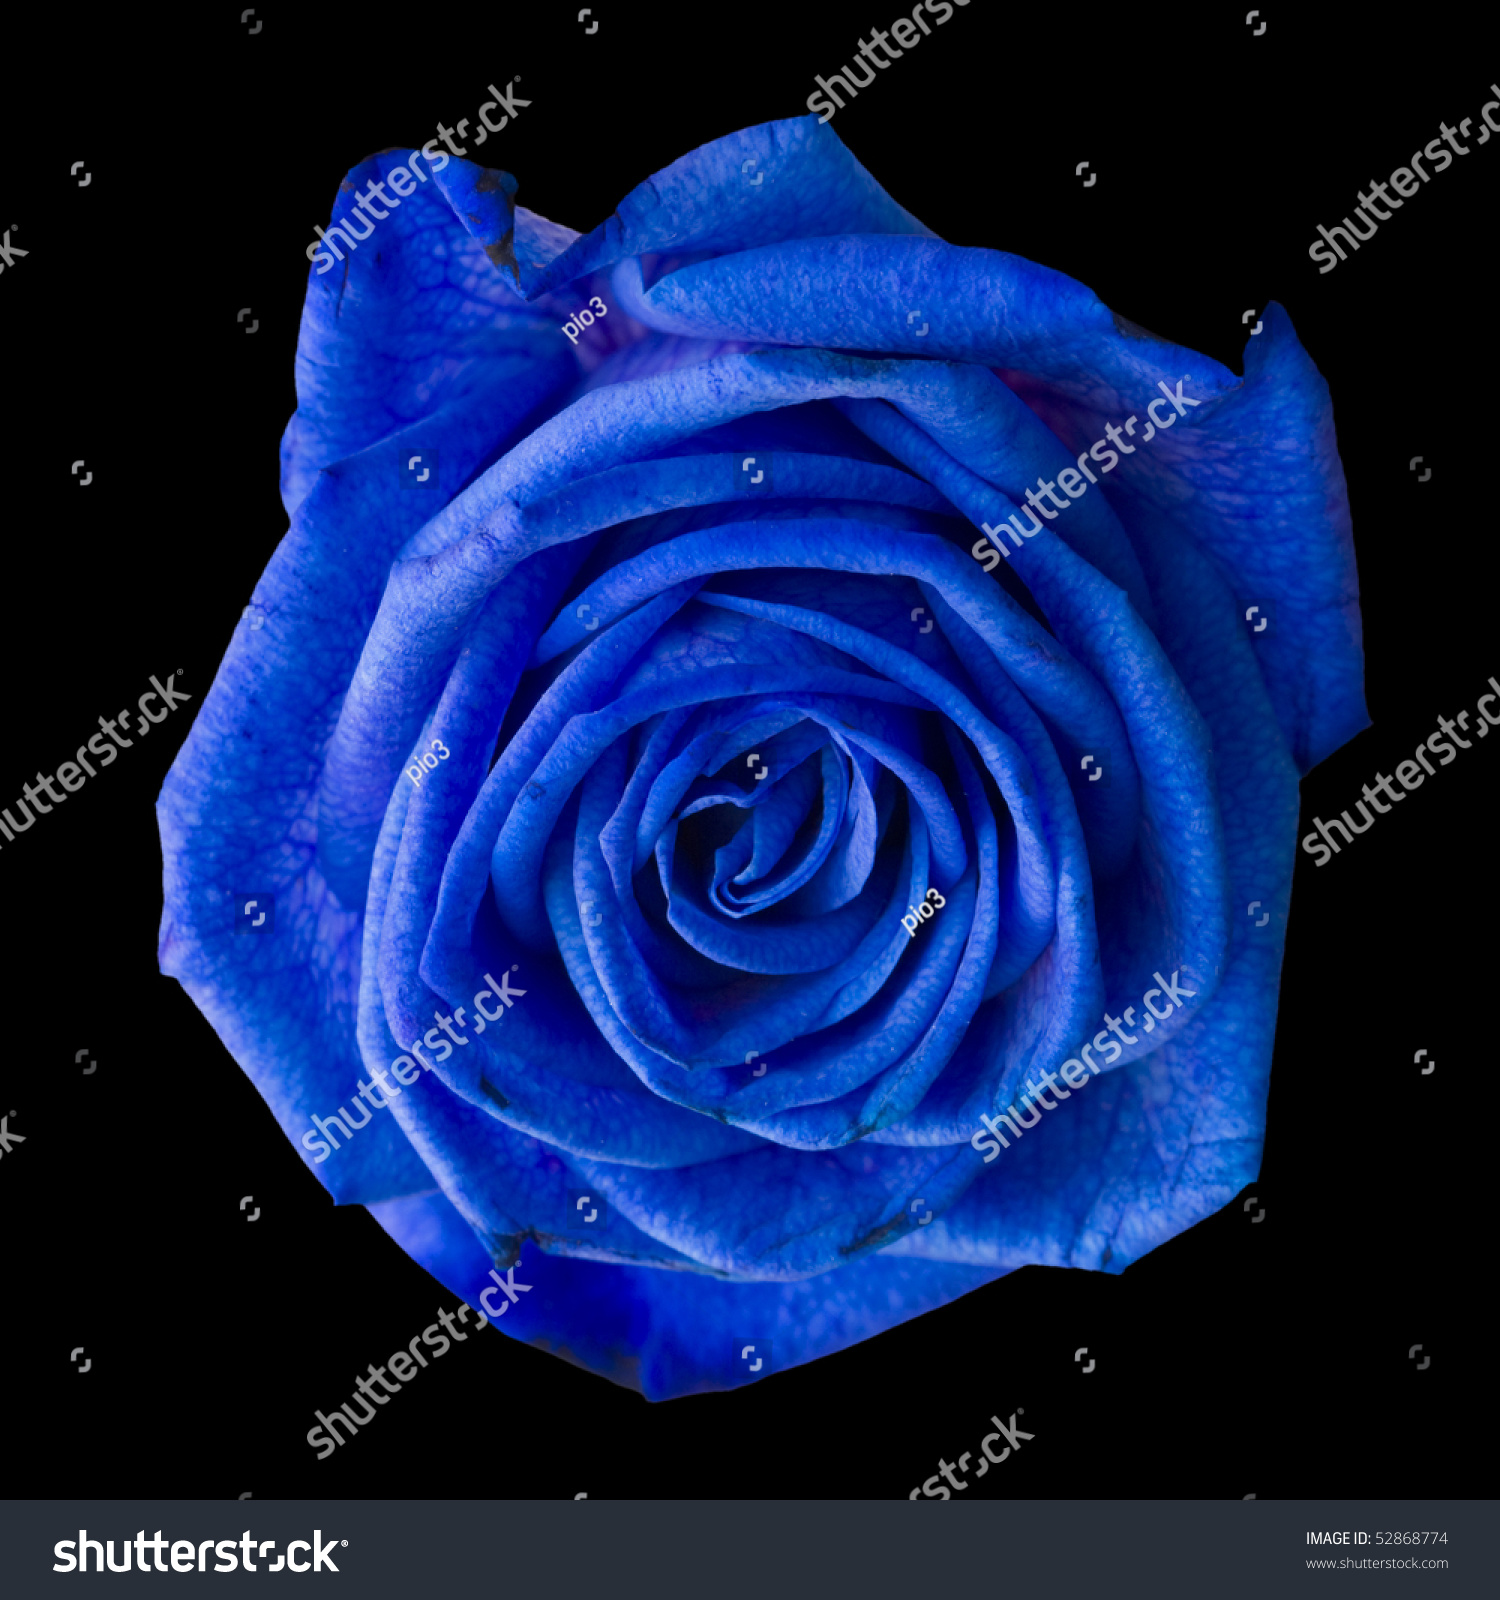 Blue Rose. Black Background. Stock Photo 52868774 : Shutterstock